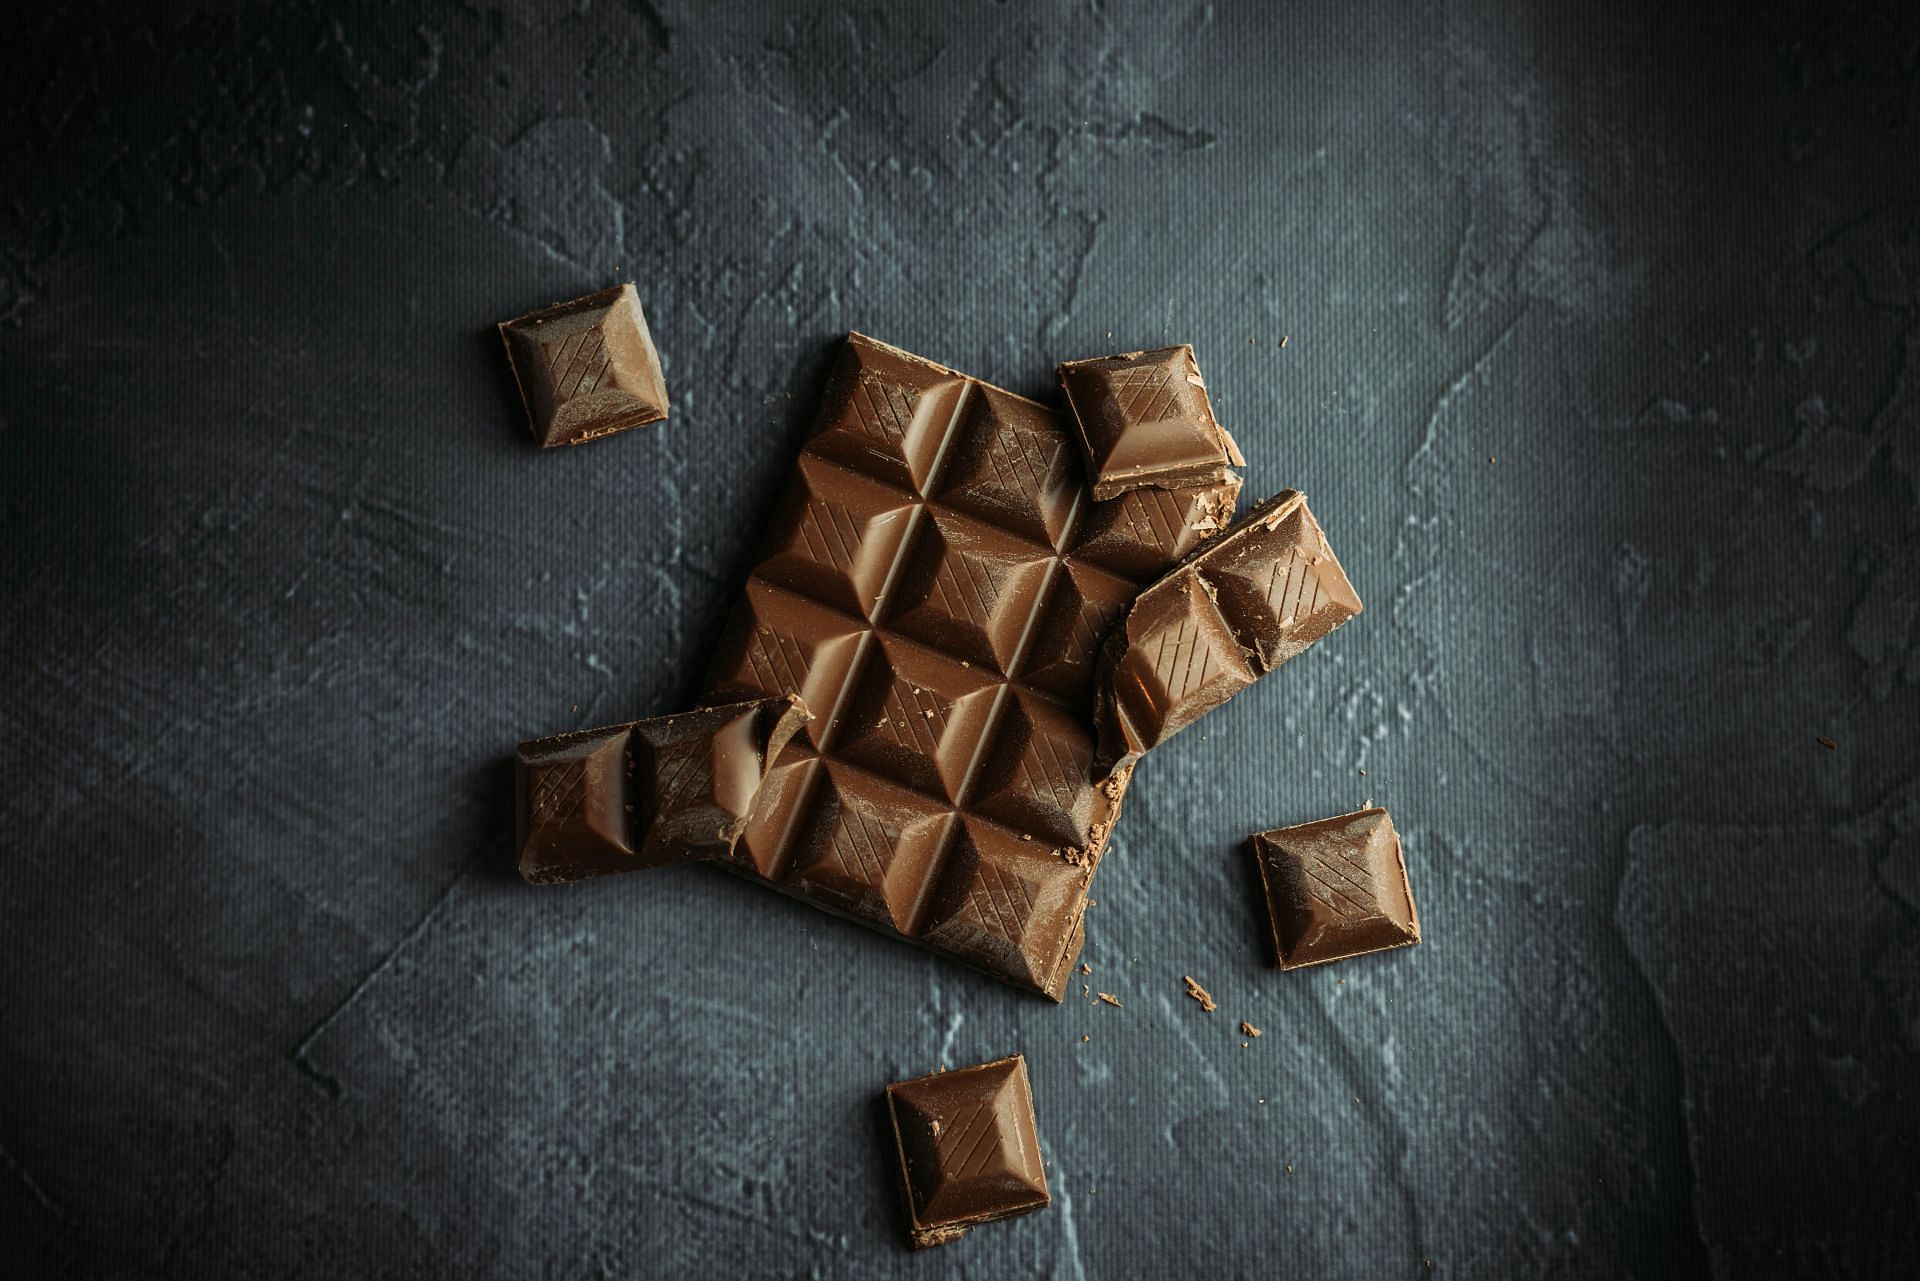 Dark chocolate improves dopamine levels. (Image via Unsplash/ Tamas Pap)